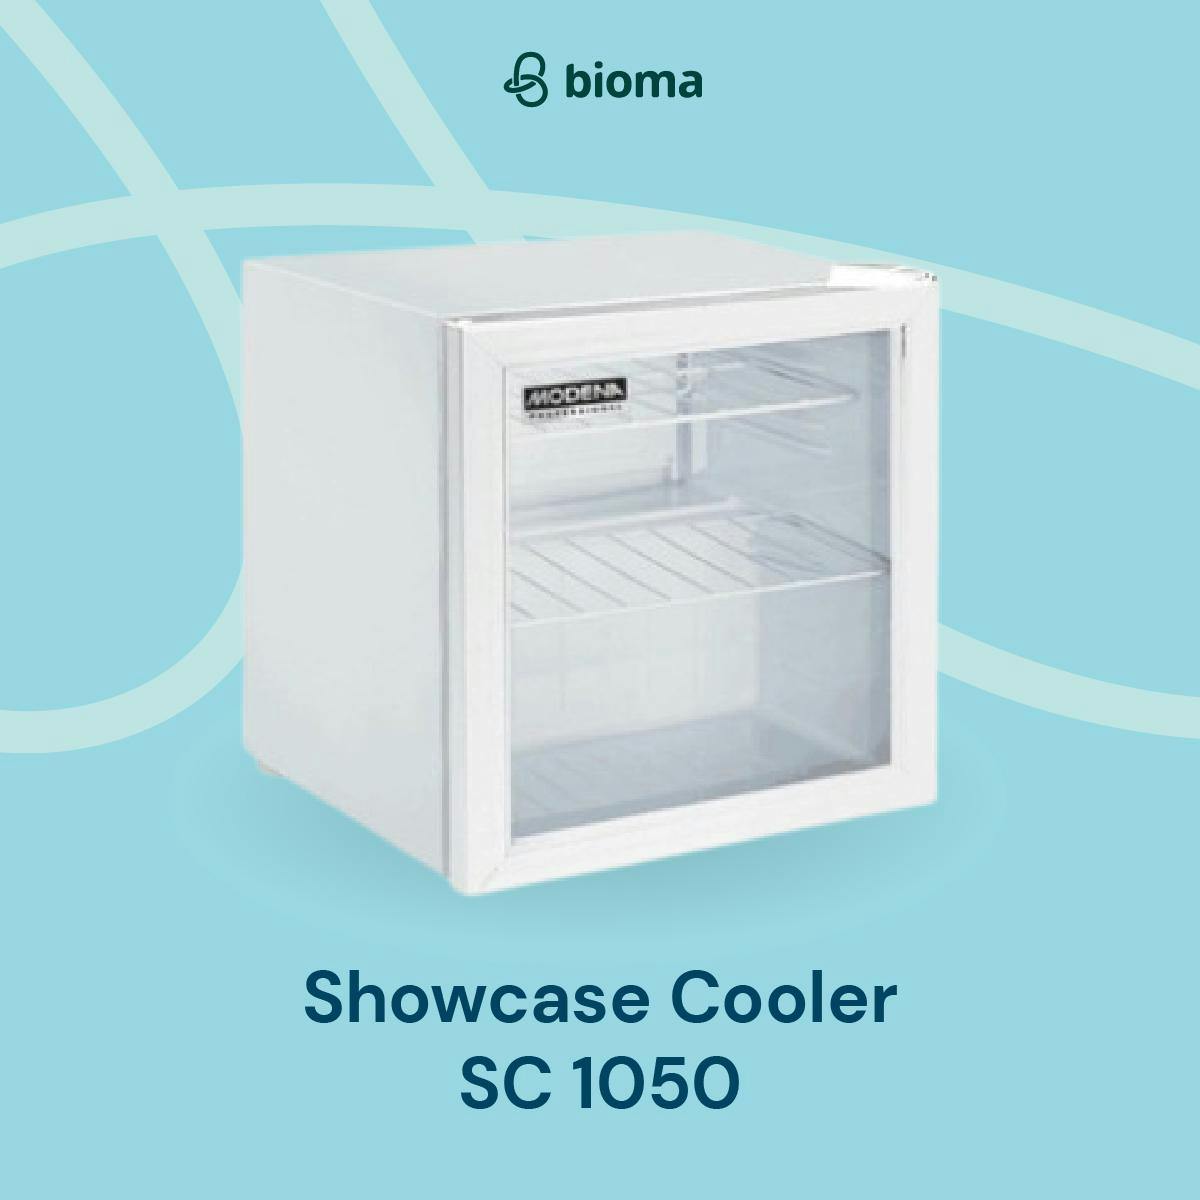 Showcase Cooler SC 1050